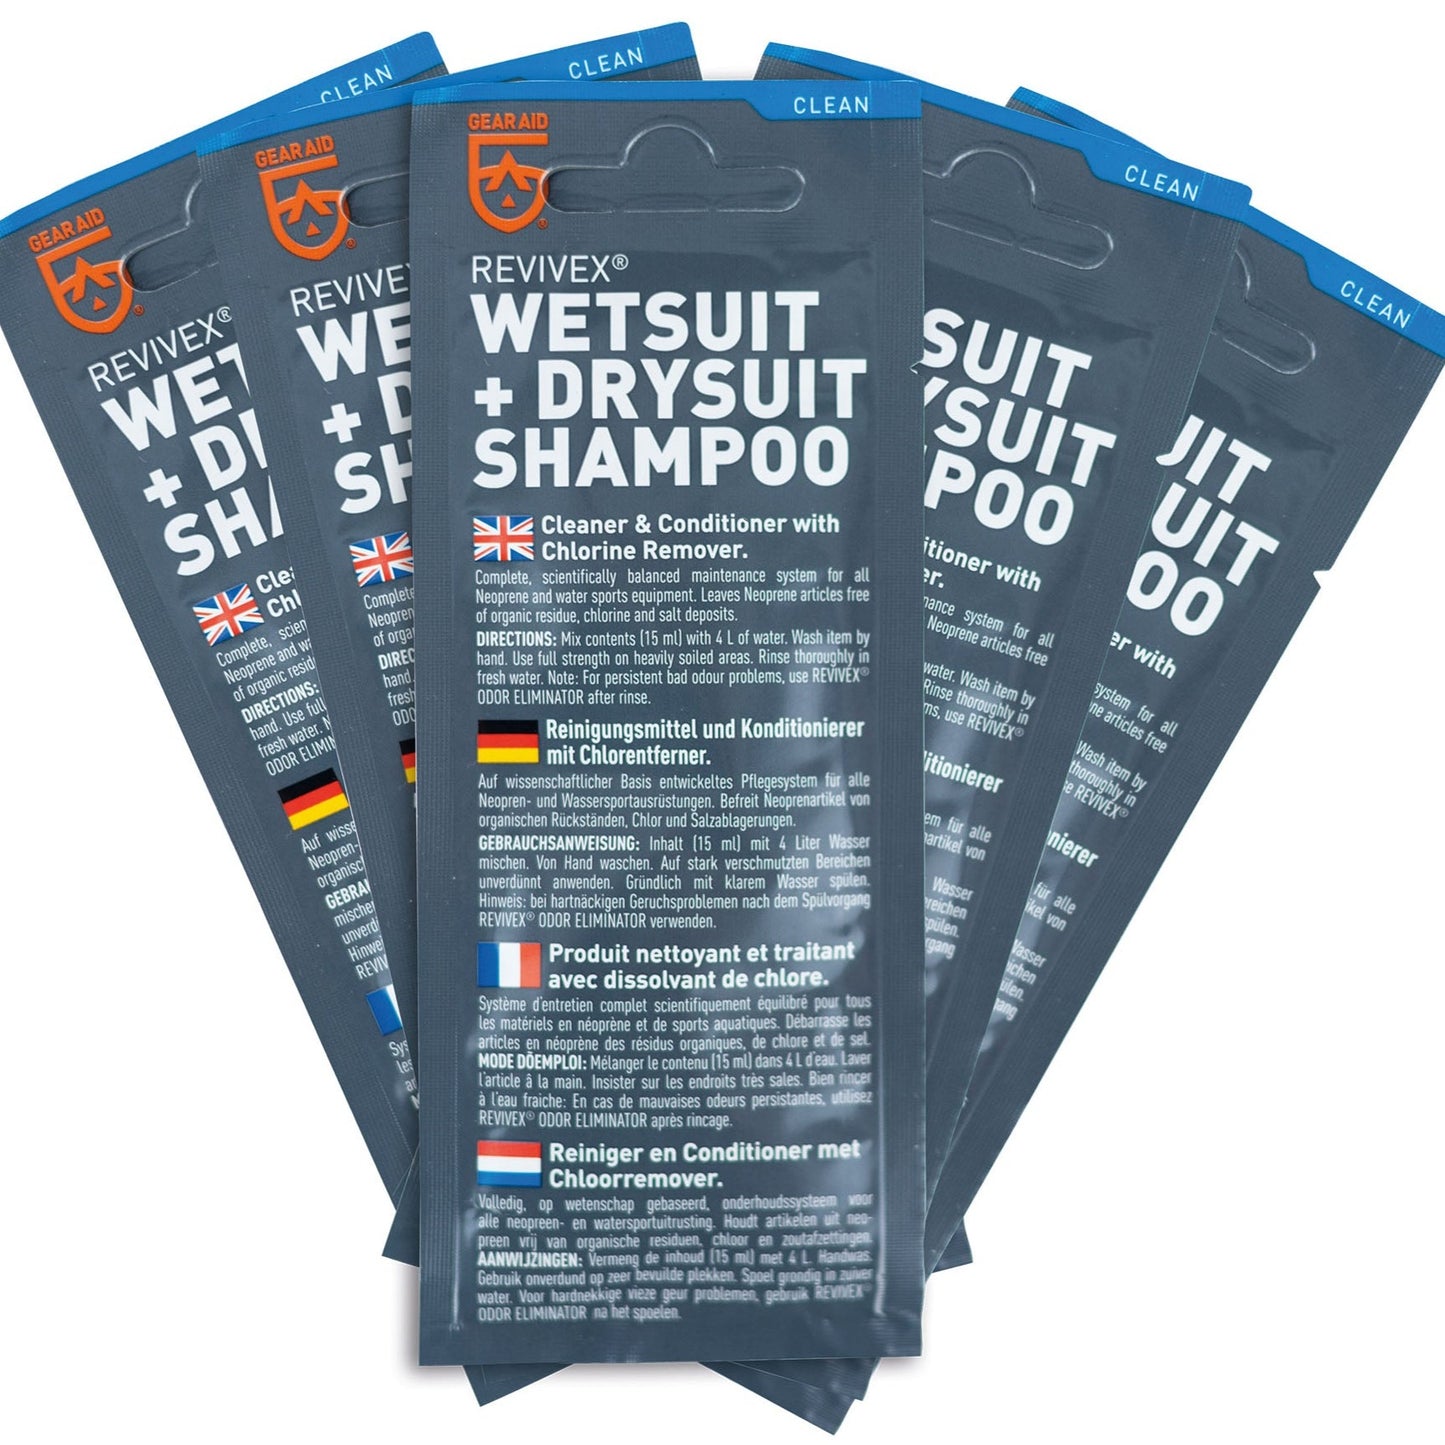 gear-aid-wetsuit-and-drysuit-shampoo-galway-ireland-blacksheepsurfco-15ml-packet